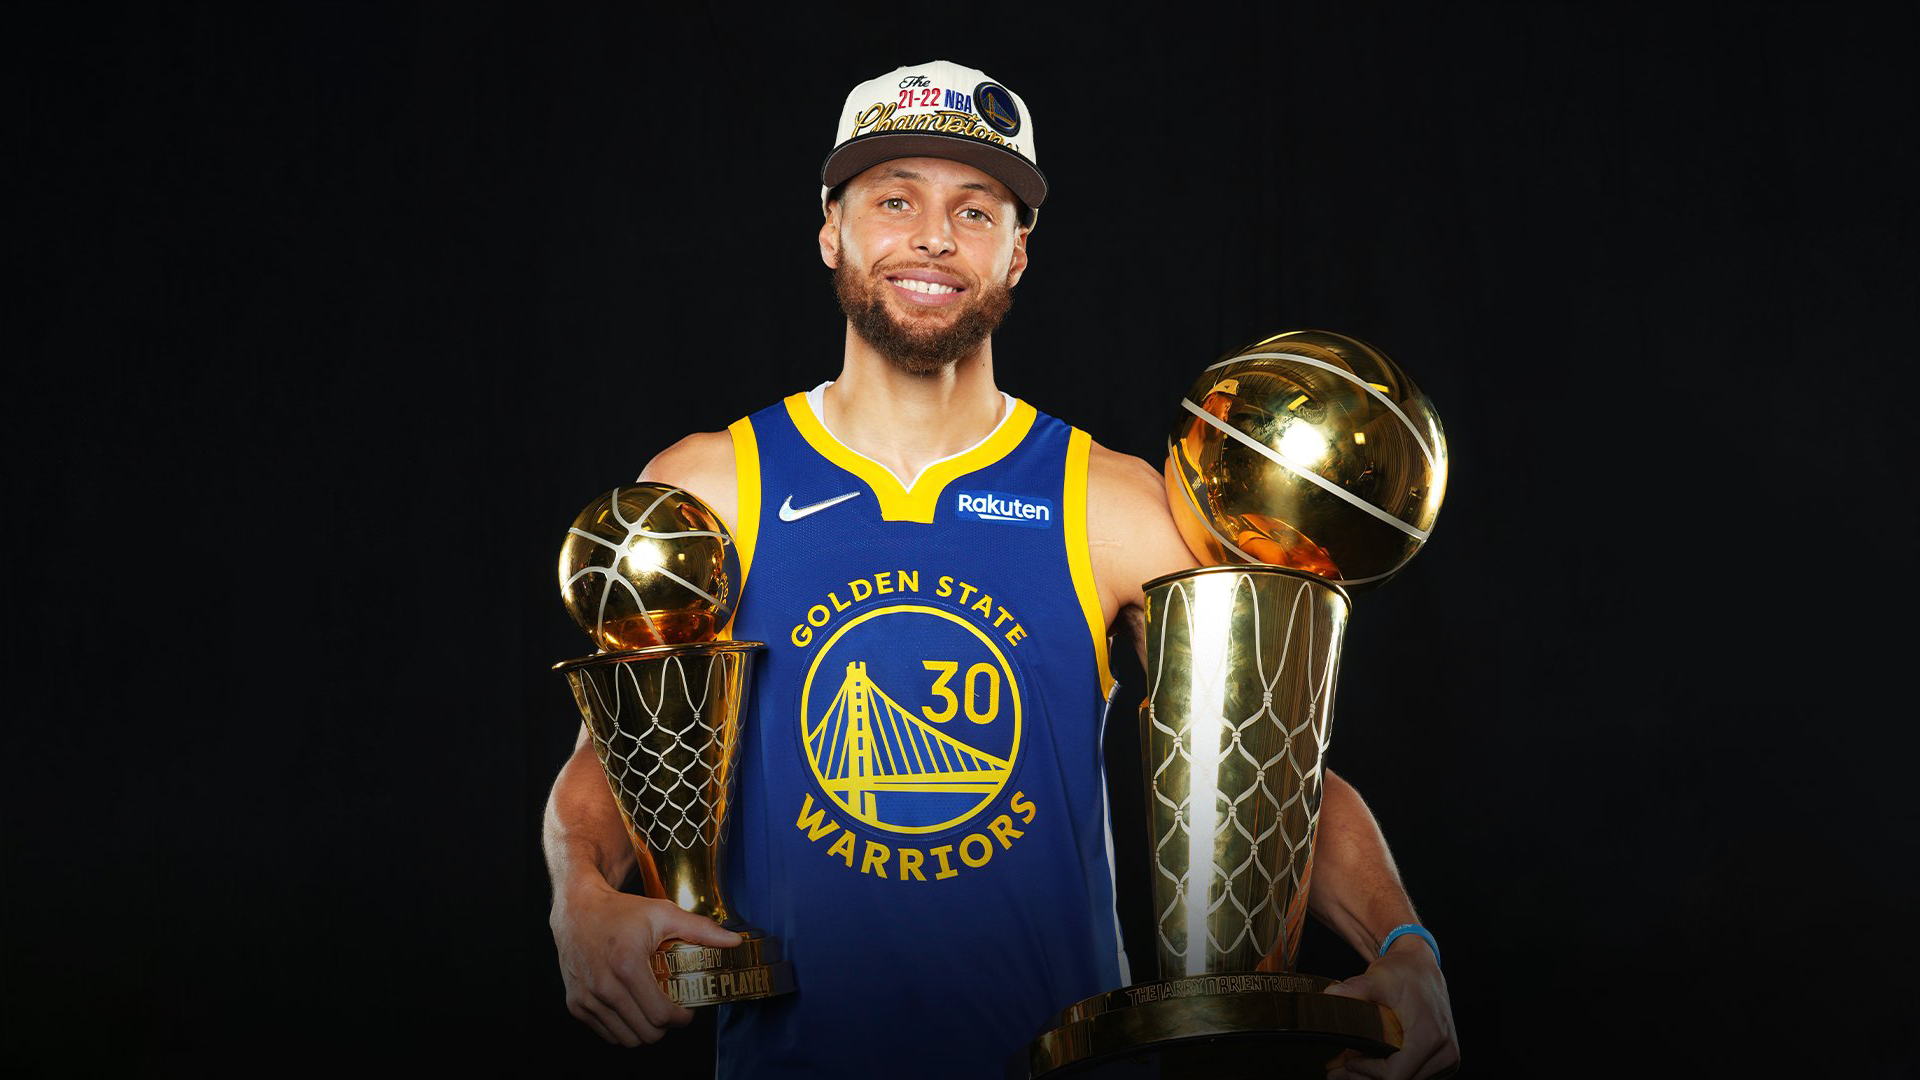 840x133620 Stephen Curry NBA 75 MVP and Champion 840x133620 Resolution